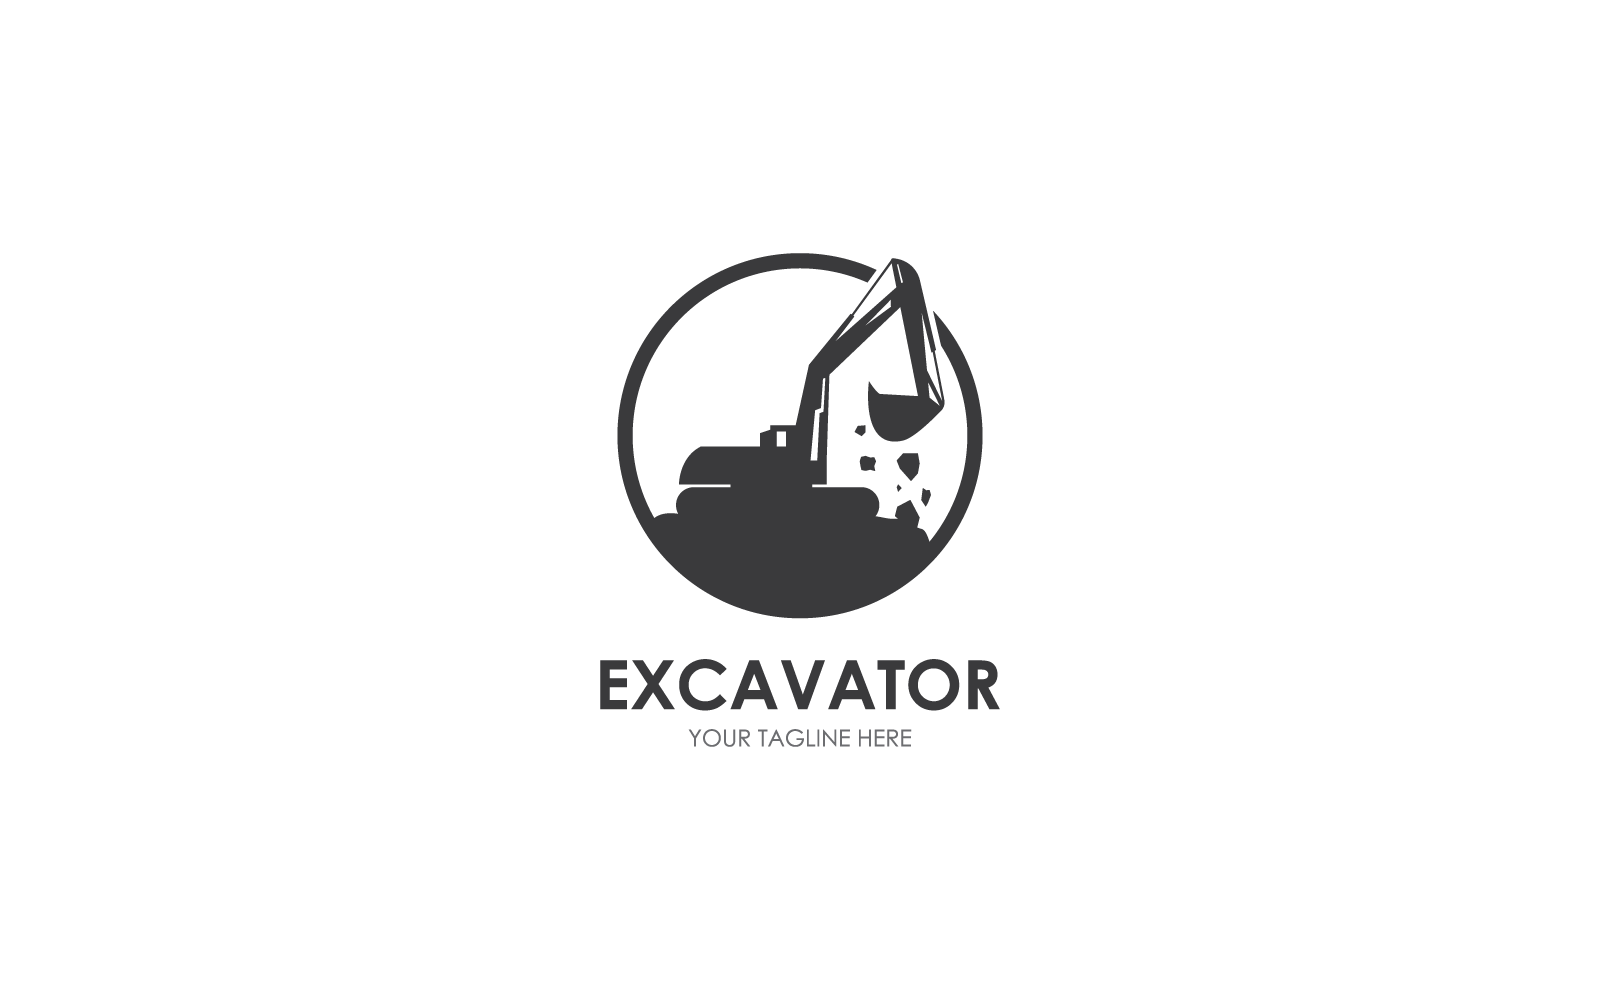 Excavator logo illustration vector template